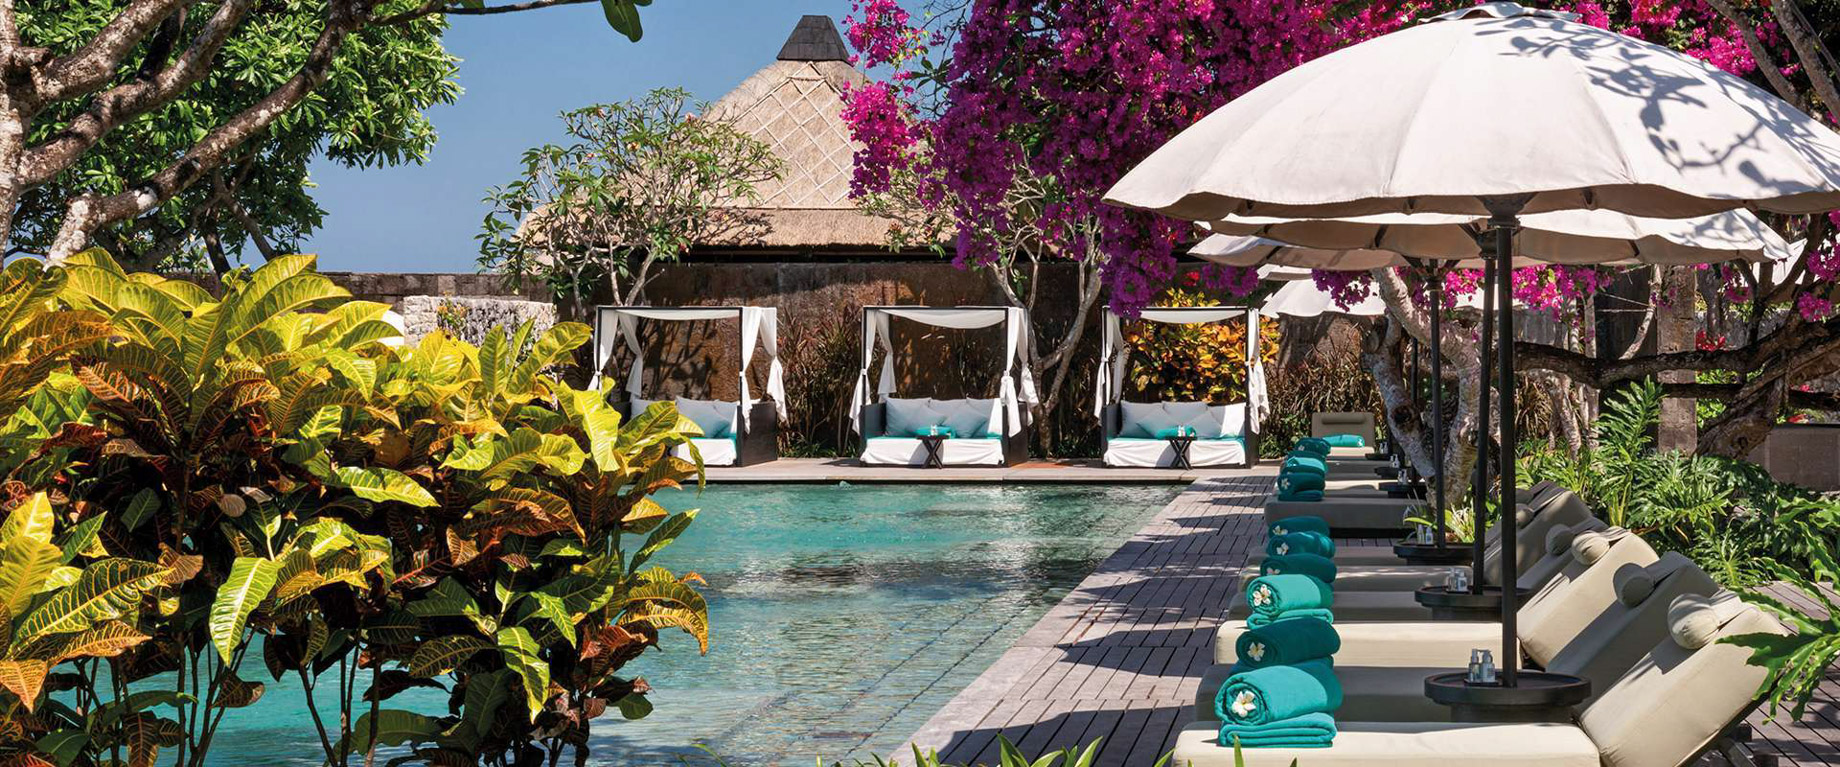 Bvlgari Resort Bali – Uluwatu, Bali, Indonesia – Infinity Pool Deck